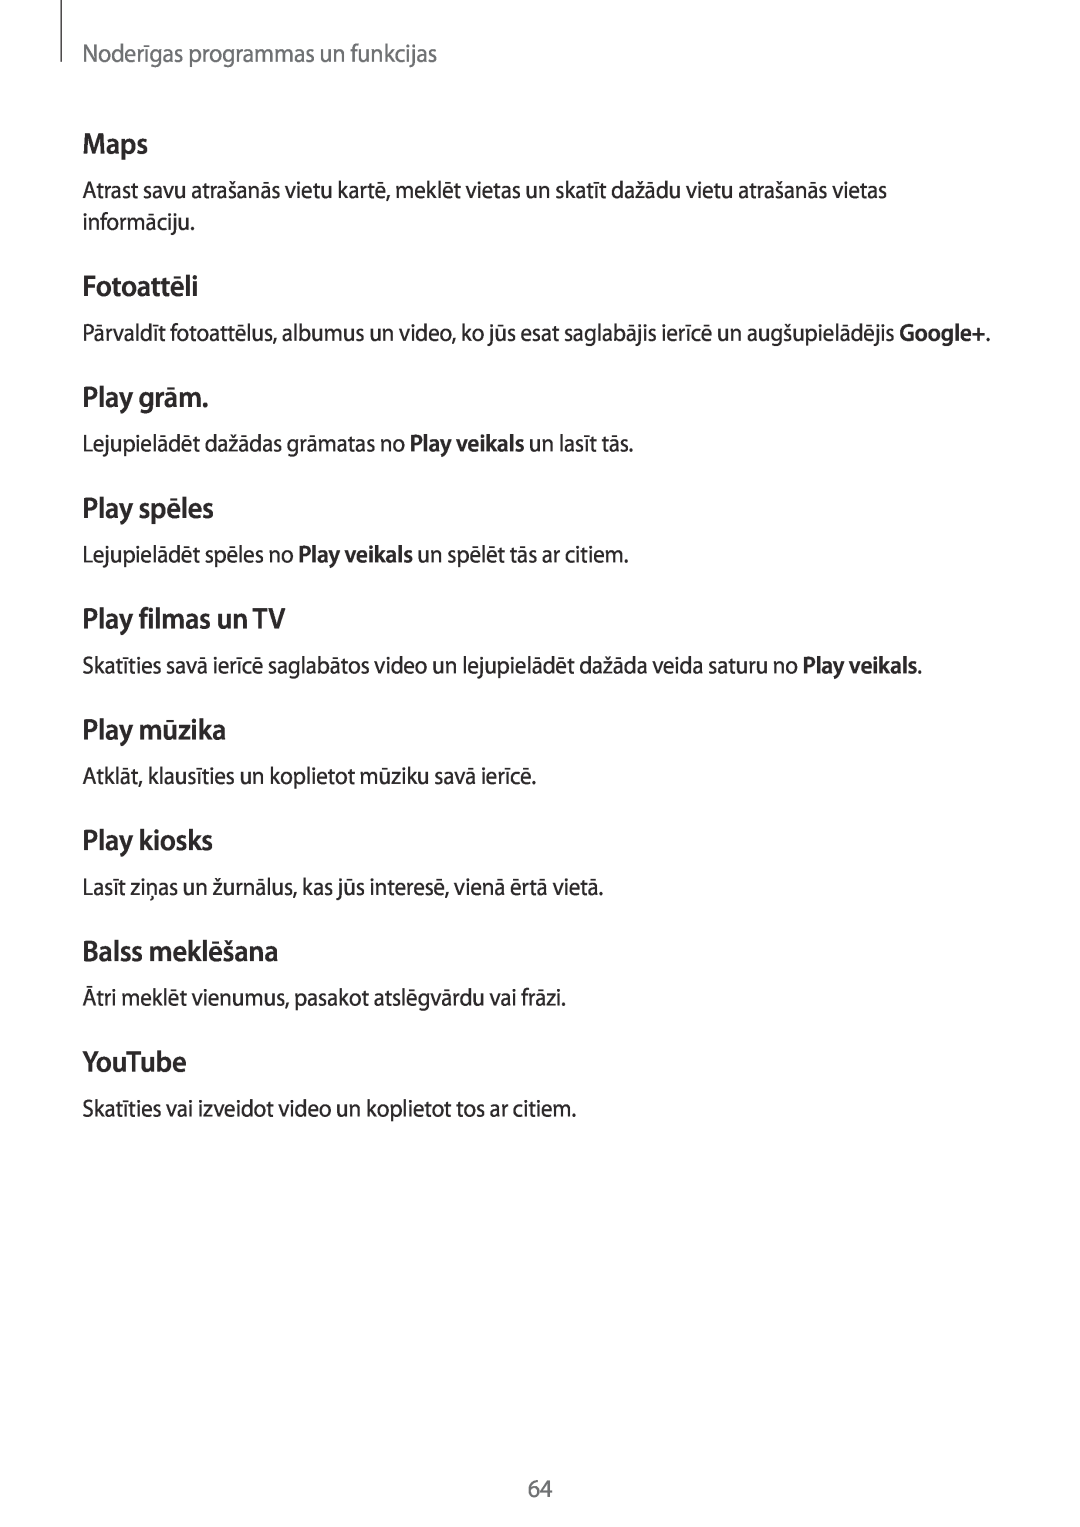 Samsung SM-G531FZAASEB Maps, Fotoattēli, Play grām, Play spēles, Play filmas un TV, Play mūzika, Play kiosks, YouTube 